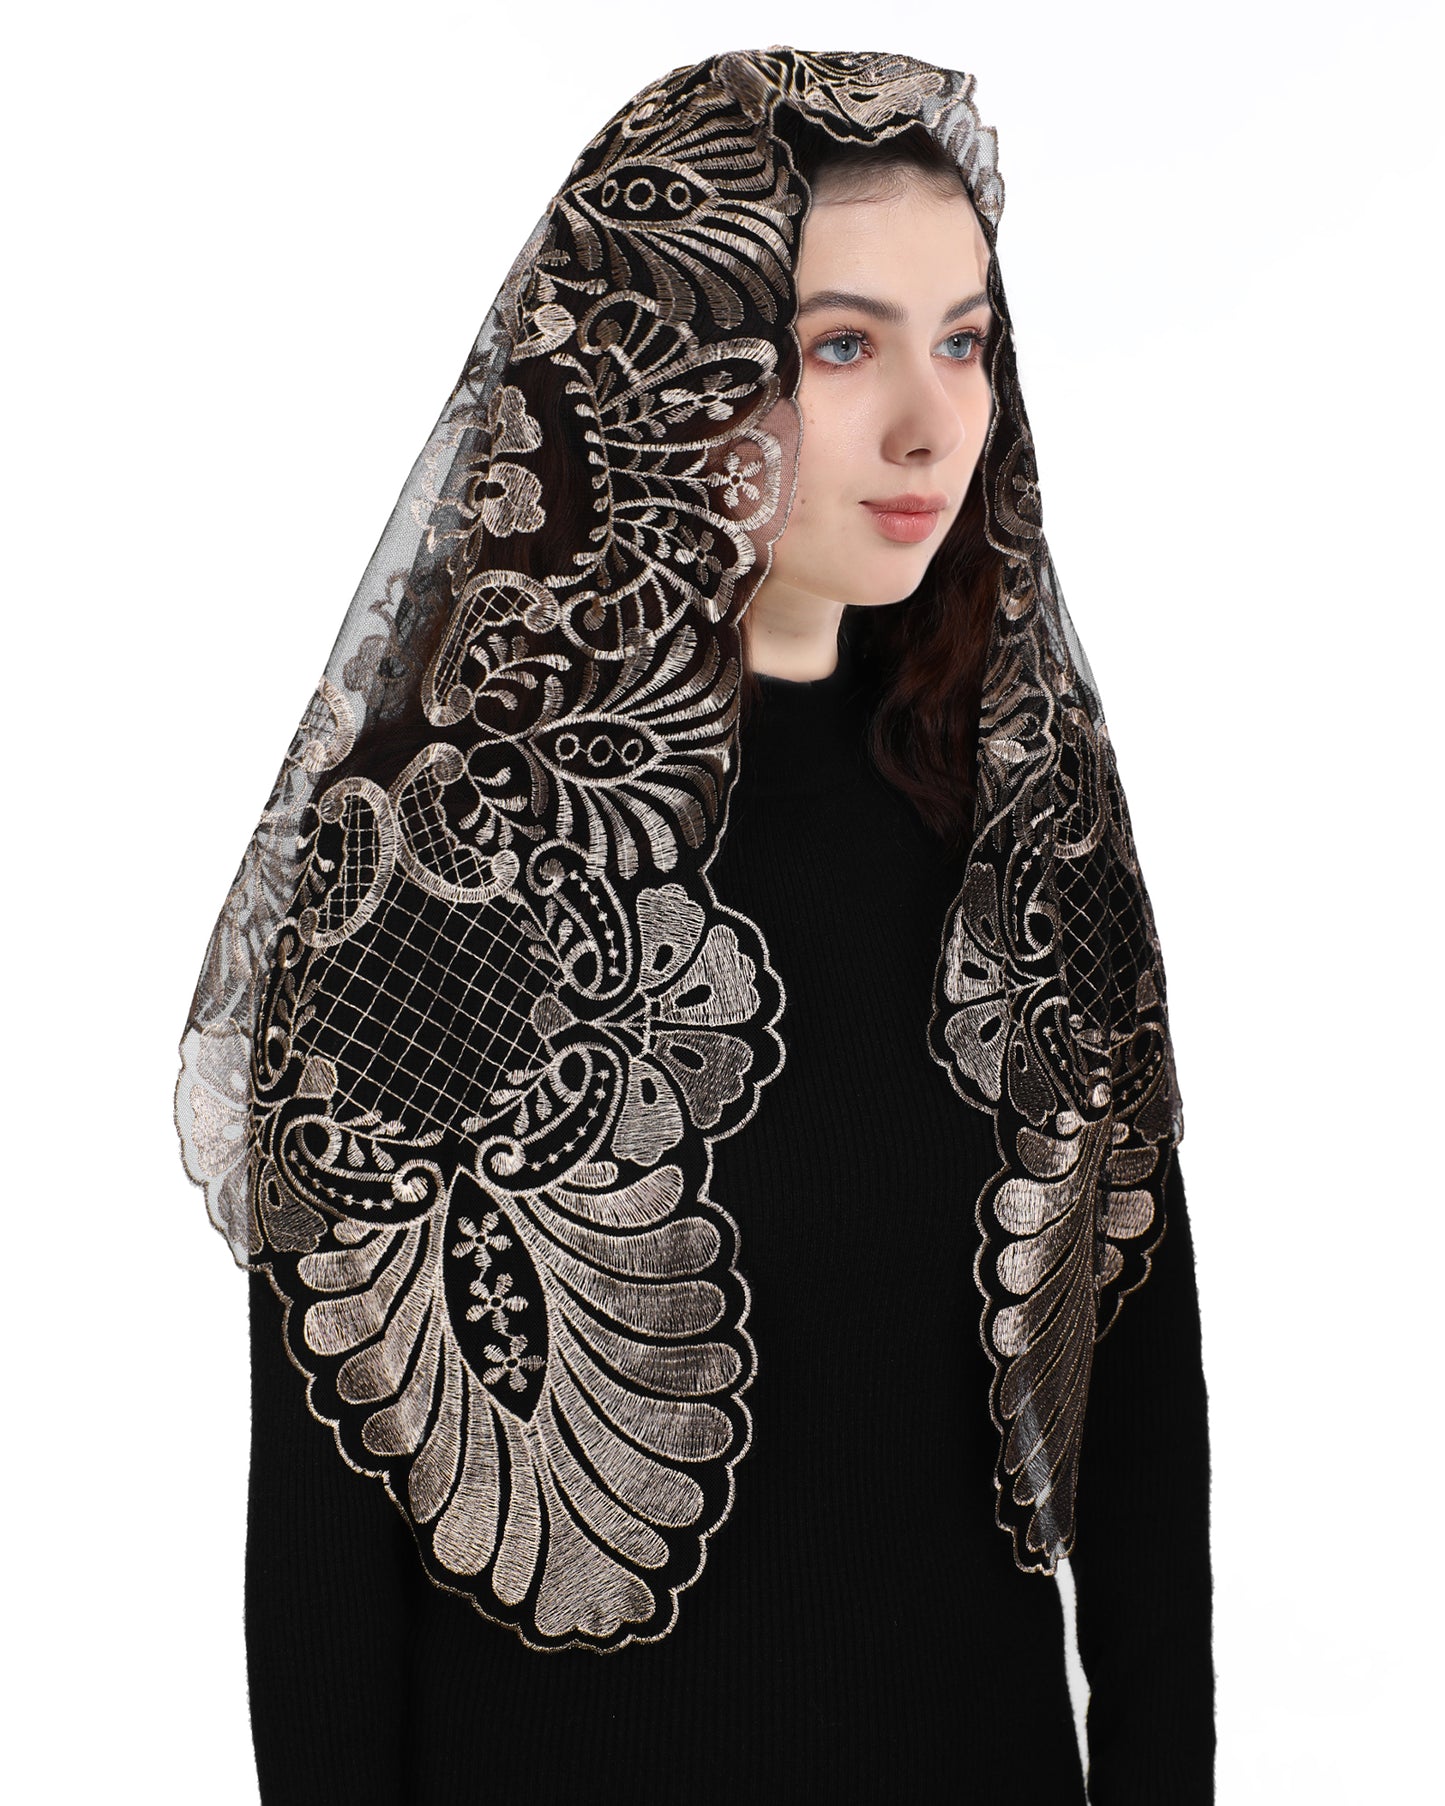 Bozidol Chapel Veils Catholic Mass Mantilla - Virgin Embroidery Lace Triangle Head Coverings Floral Church Veil